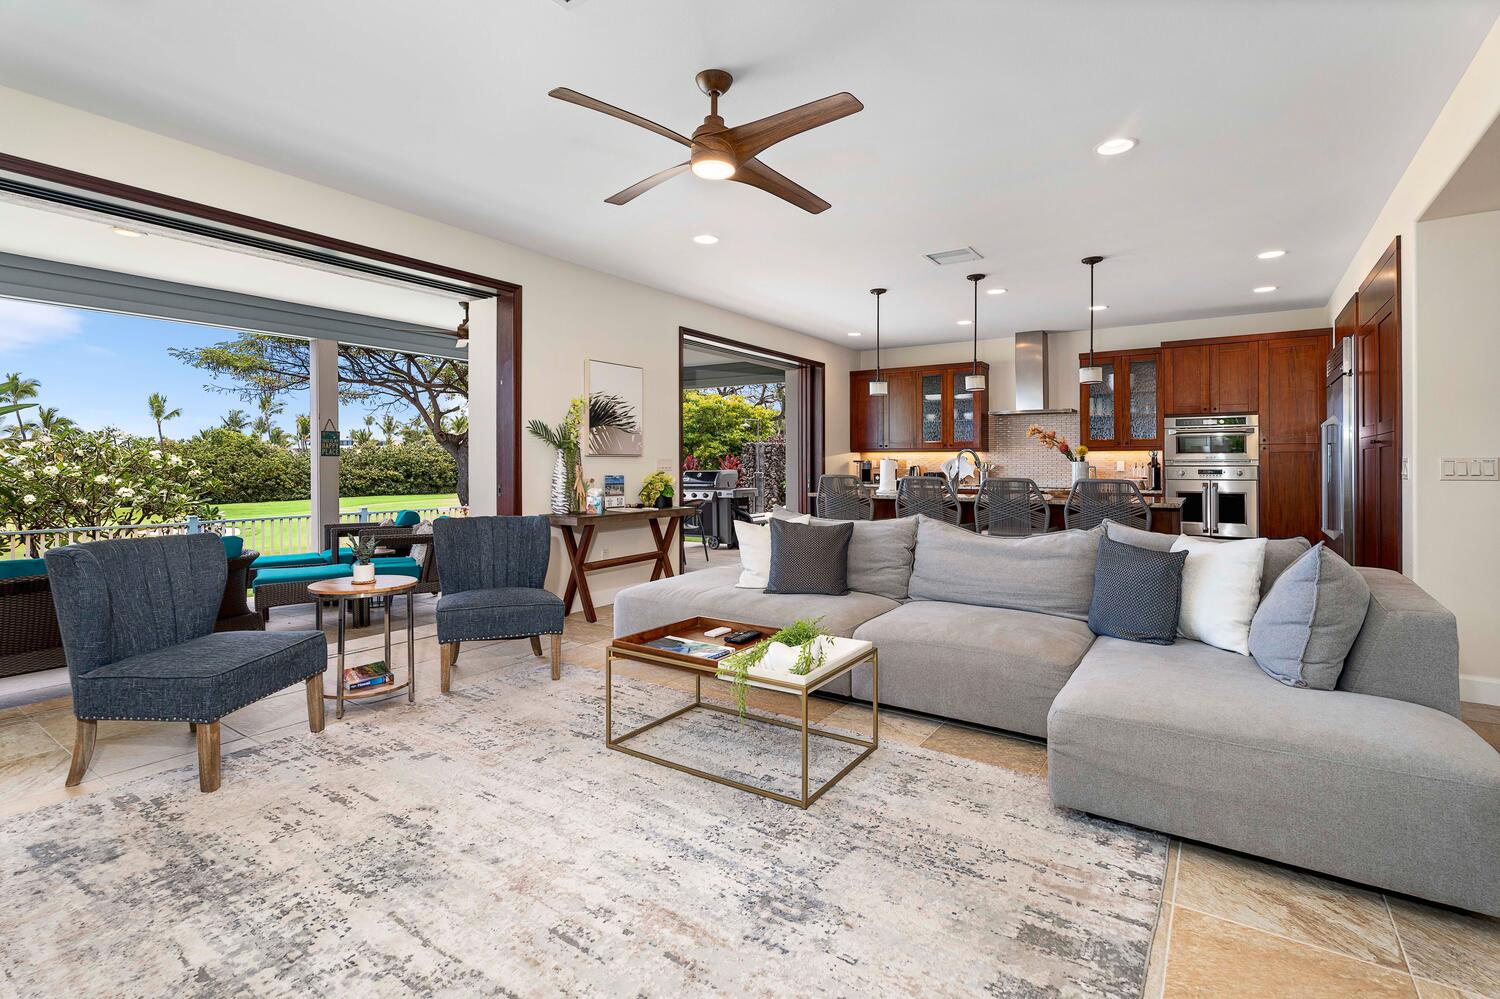 Kailua-Kona Vacation Rentals, Holua Kai #26 - Open concept living space seamlessly blending modern lounge and kitchen areas.